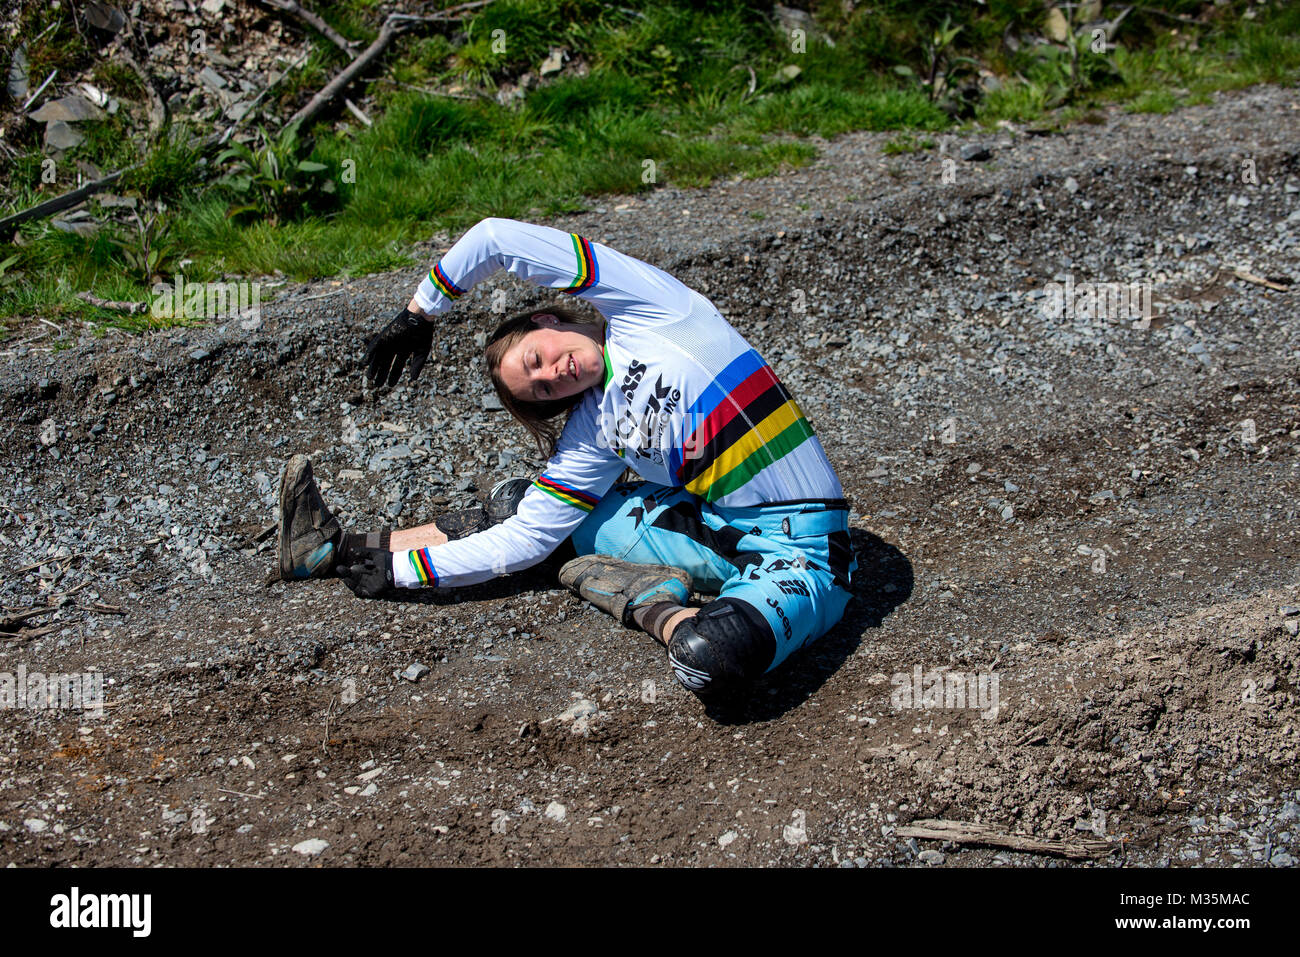 Multiple world champion downhill mountain bike racer Rachel Atherton warms up before riding. Stock Photo